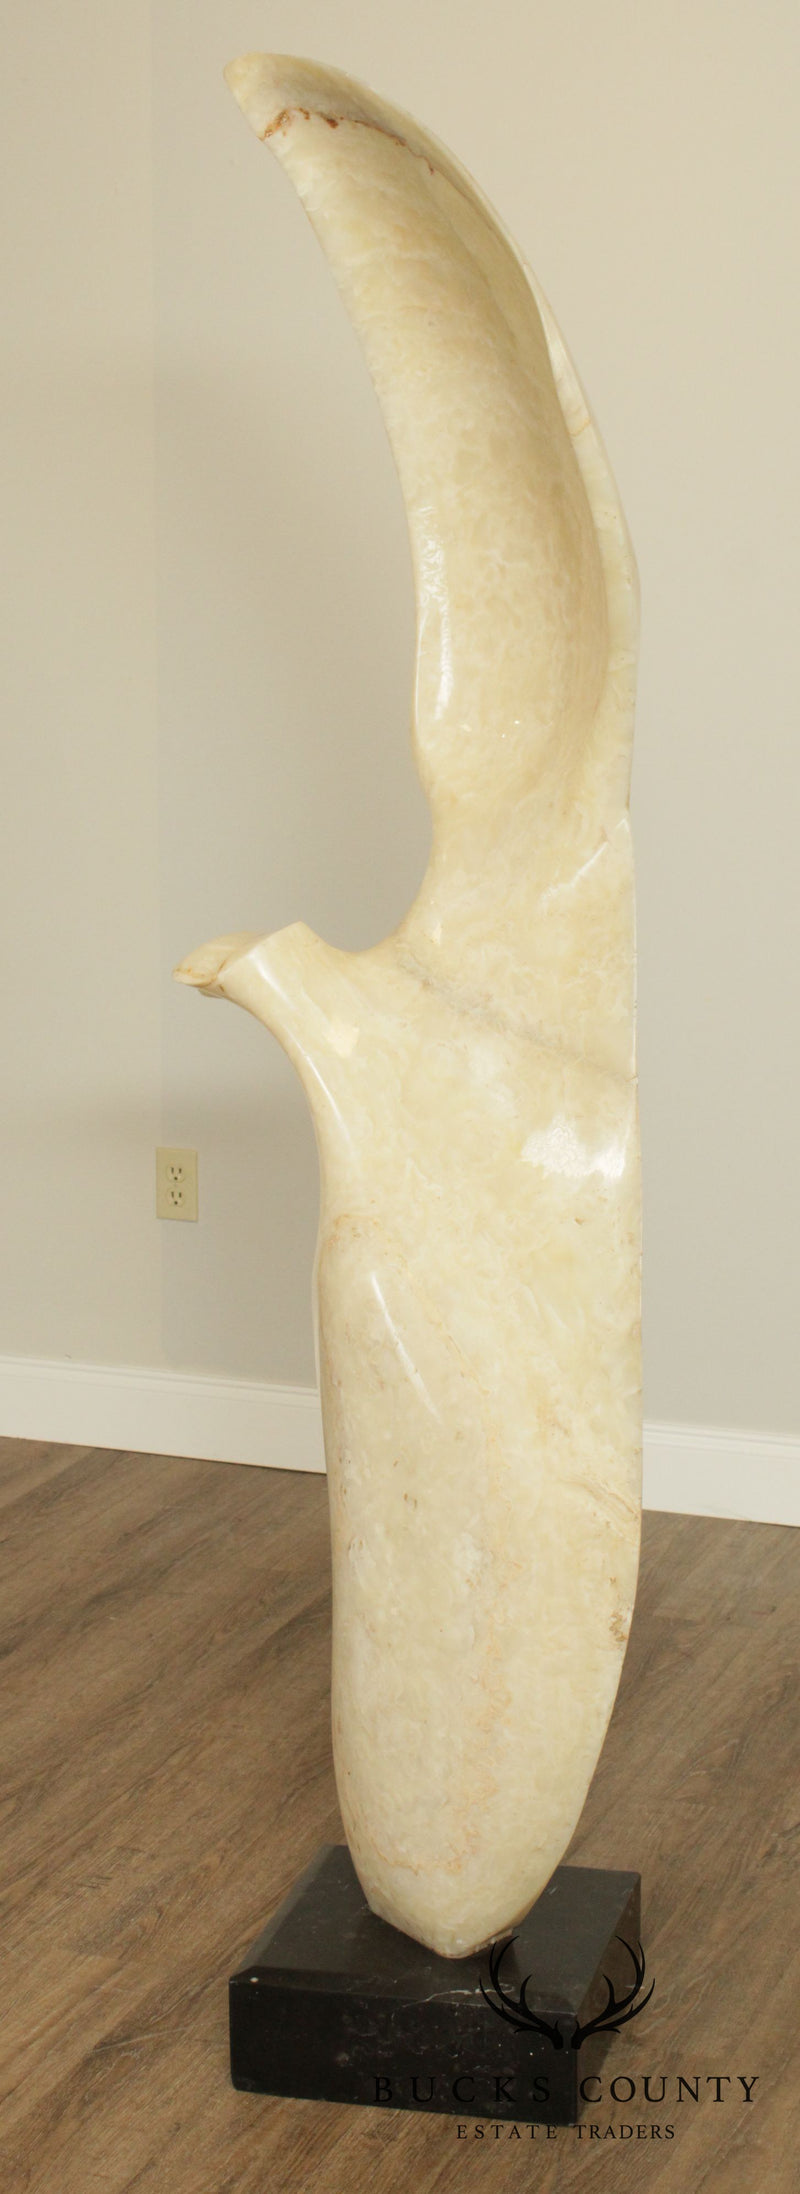 Leonardo Nierman Monumental Bird in Flight Onyx Abstract Sculpture – Bucks  County Estate Traders